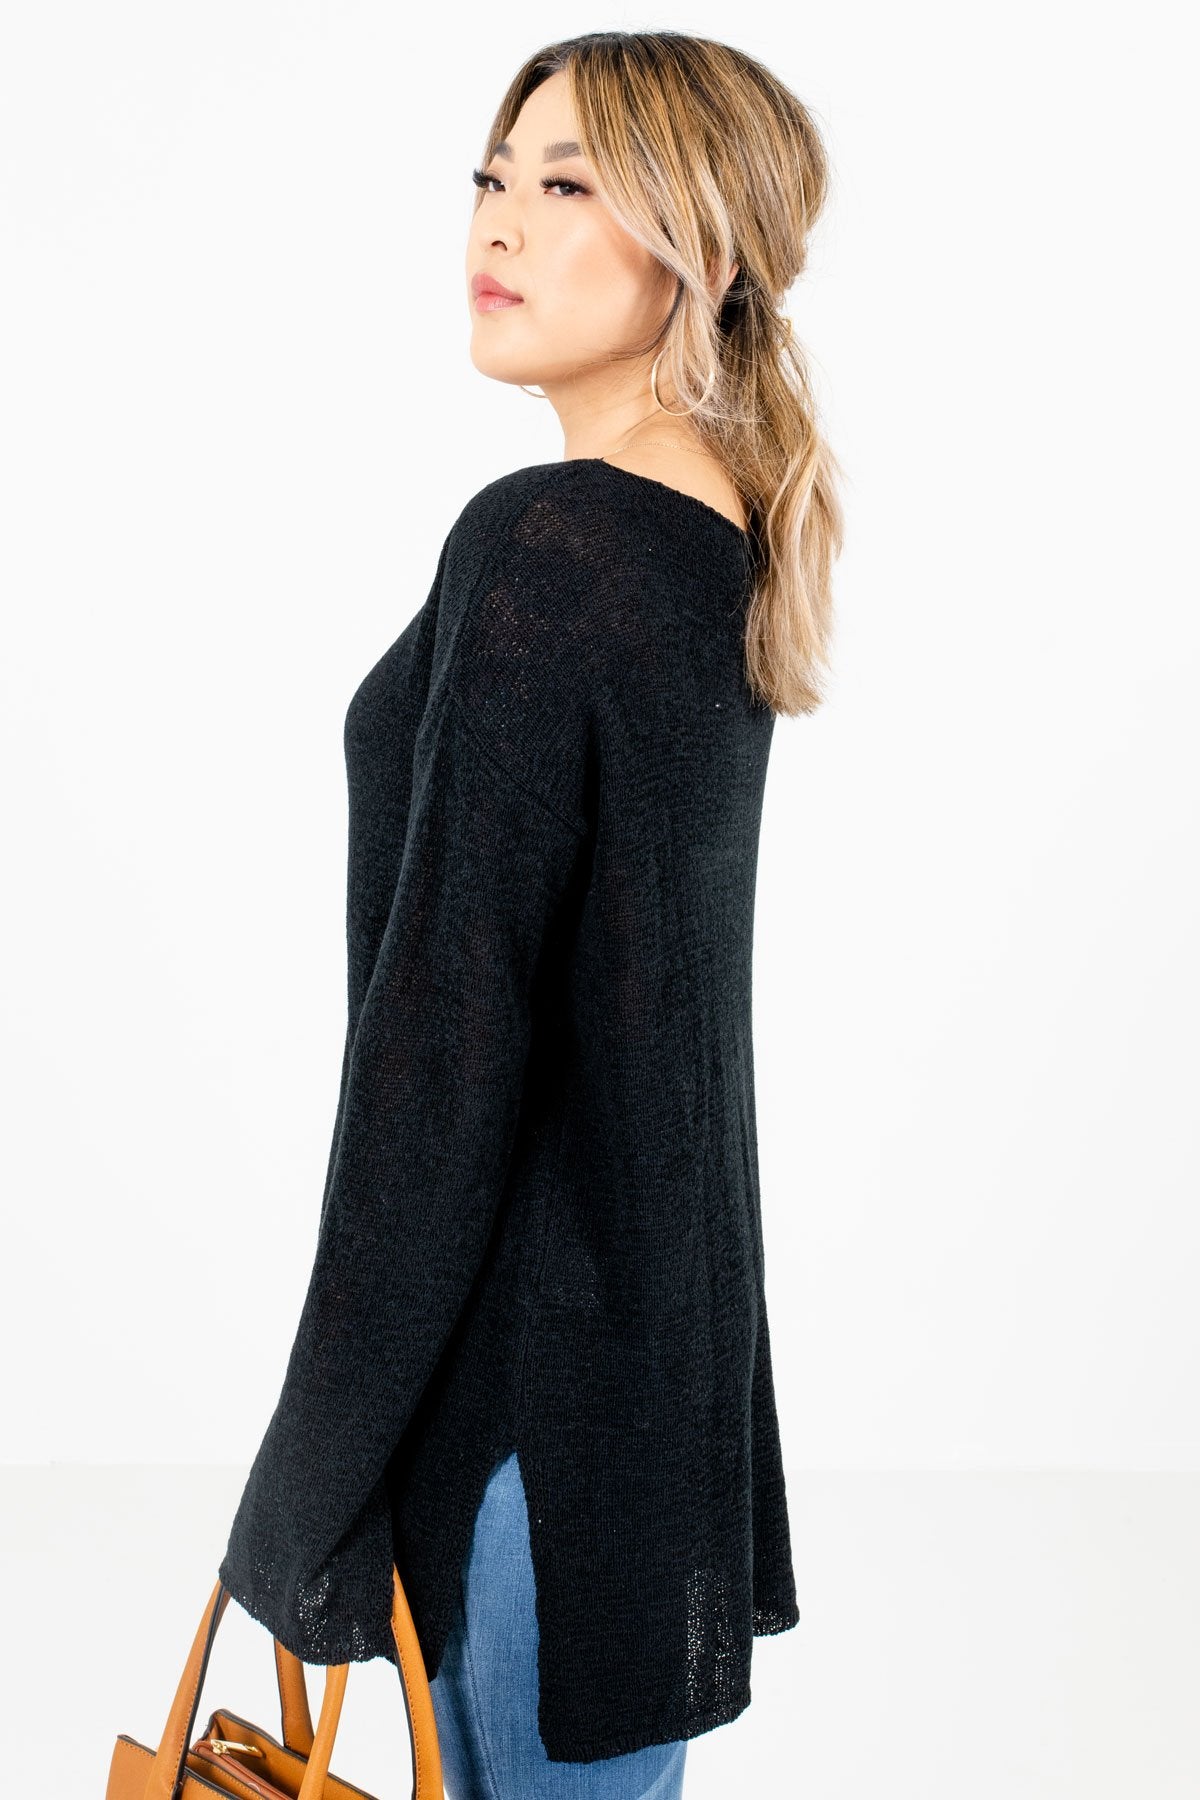 Black Wide Round Neckline Boutique Sweaters for Women